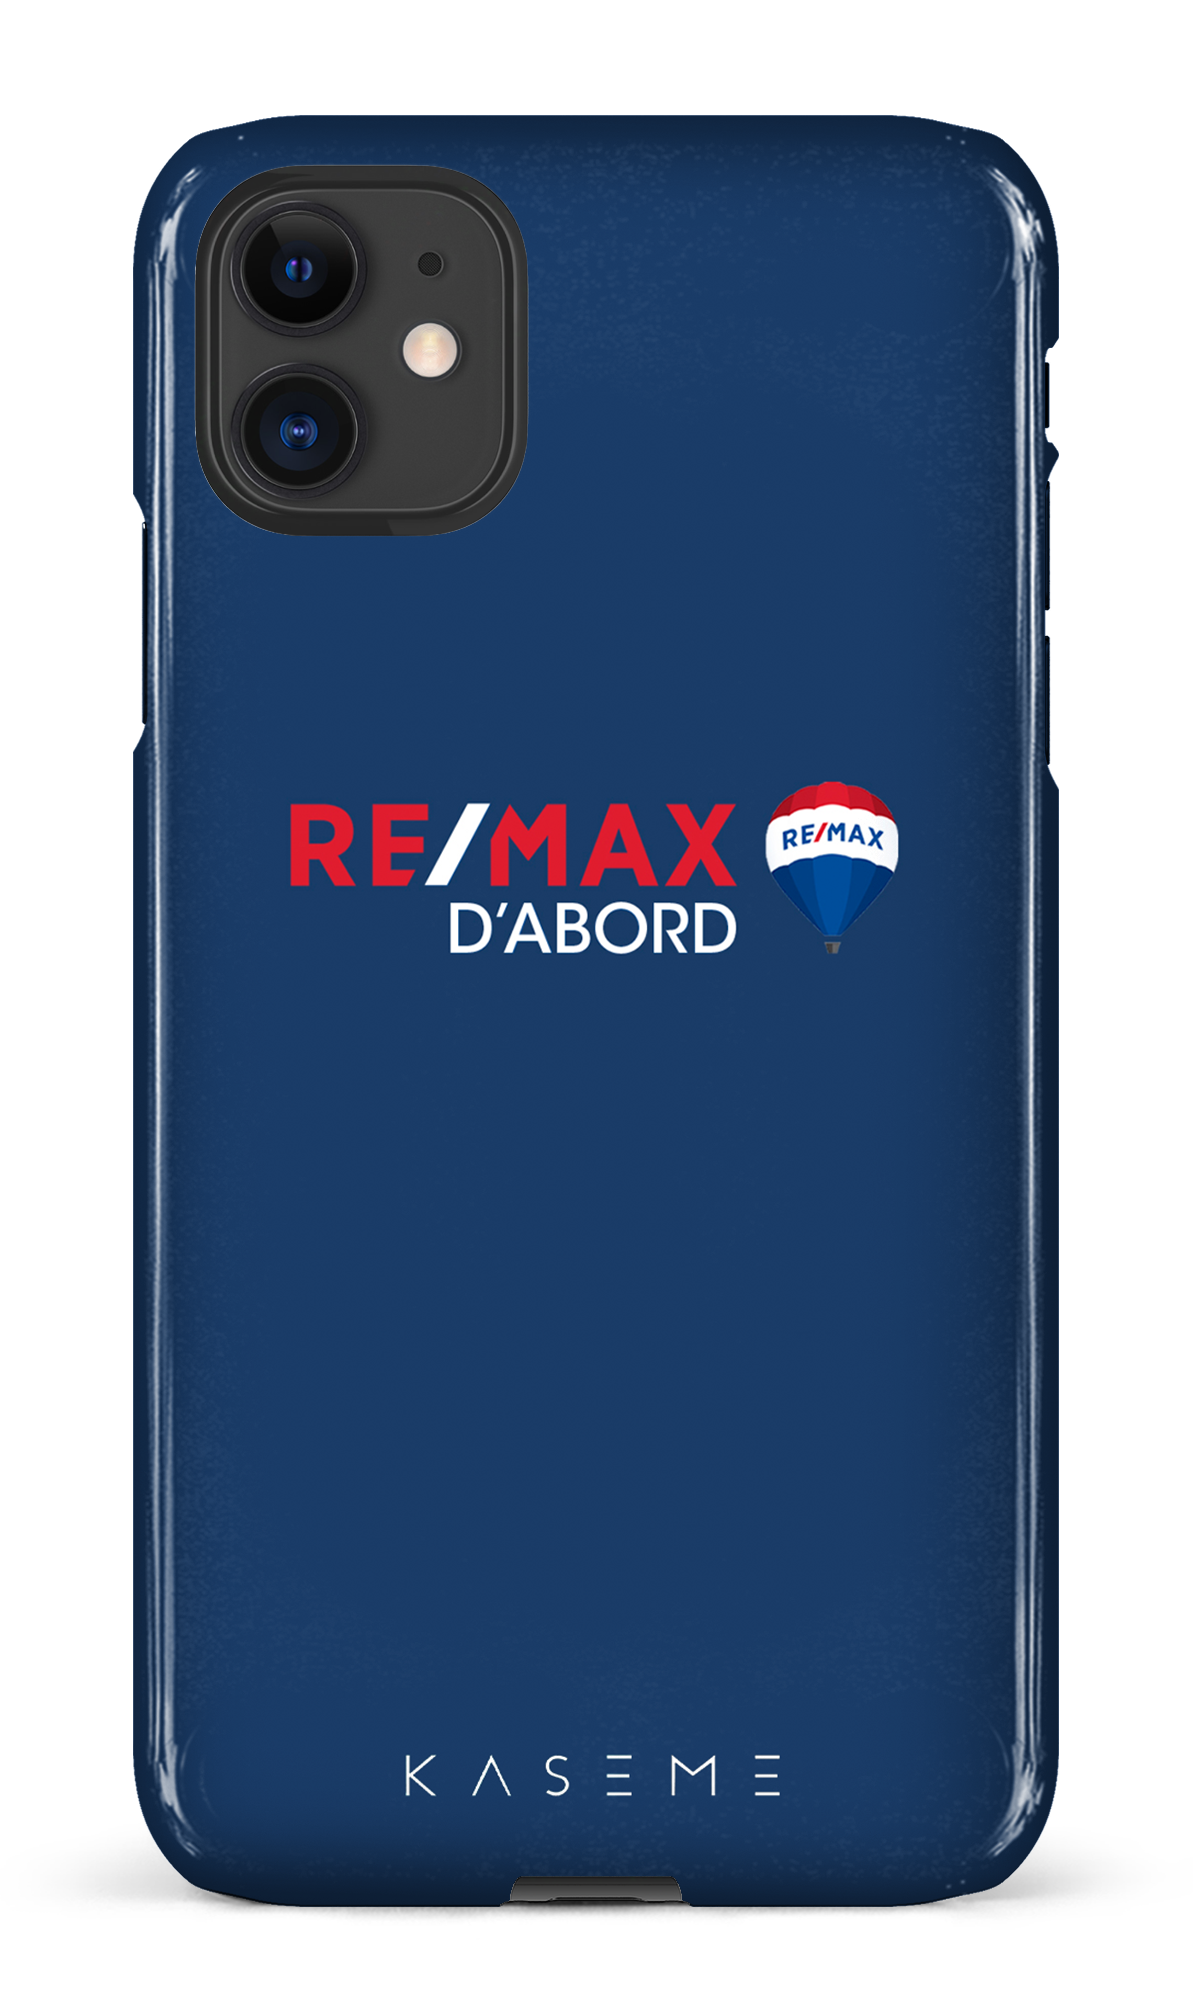 Remax D'abord Bleu - iPhone 11